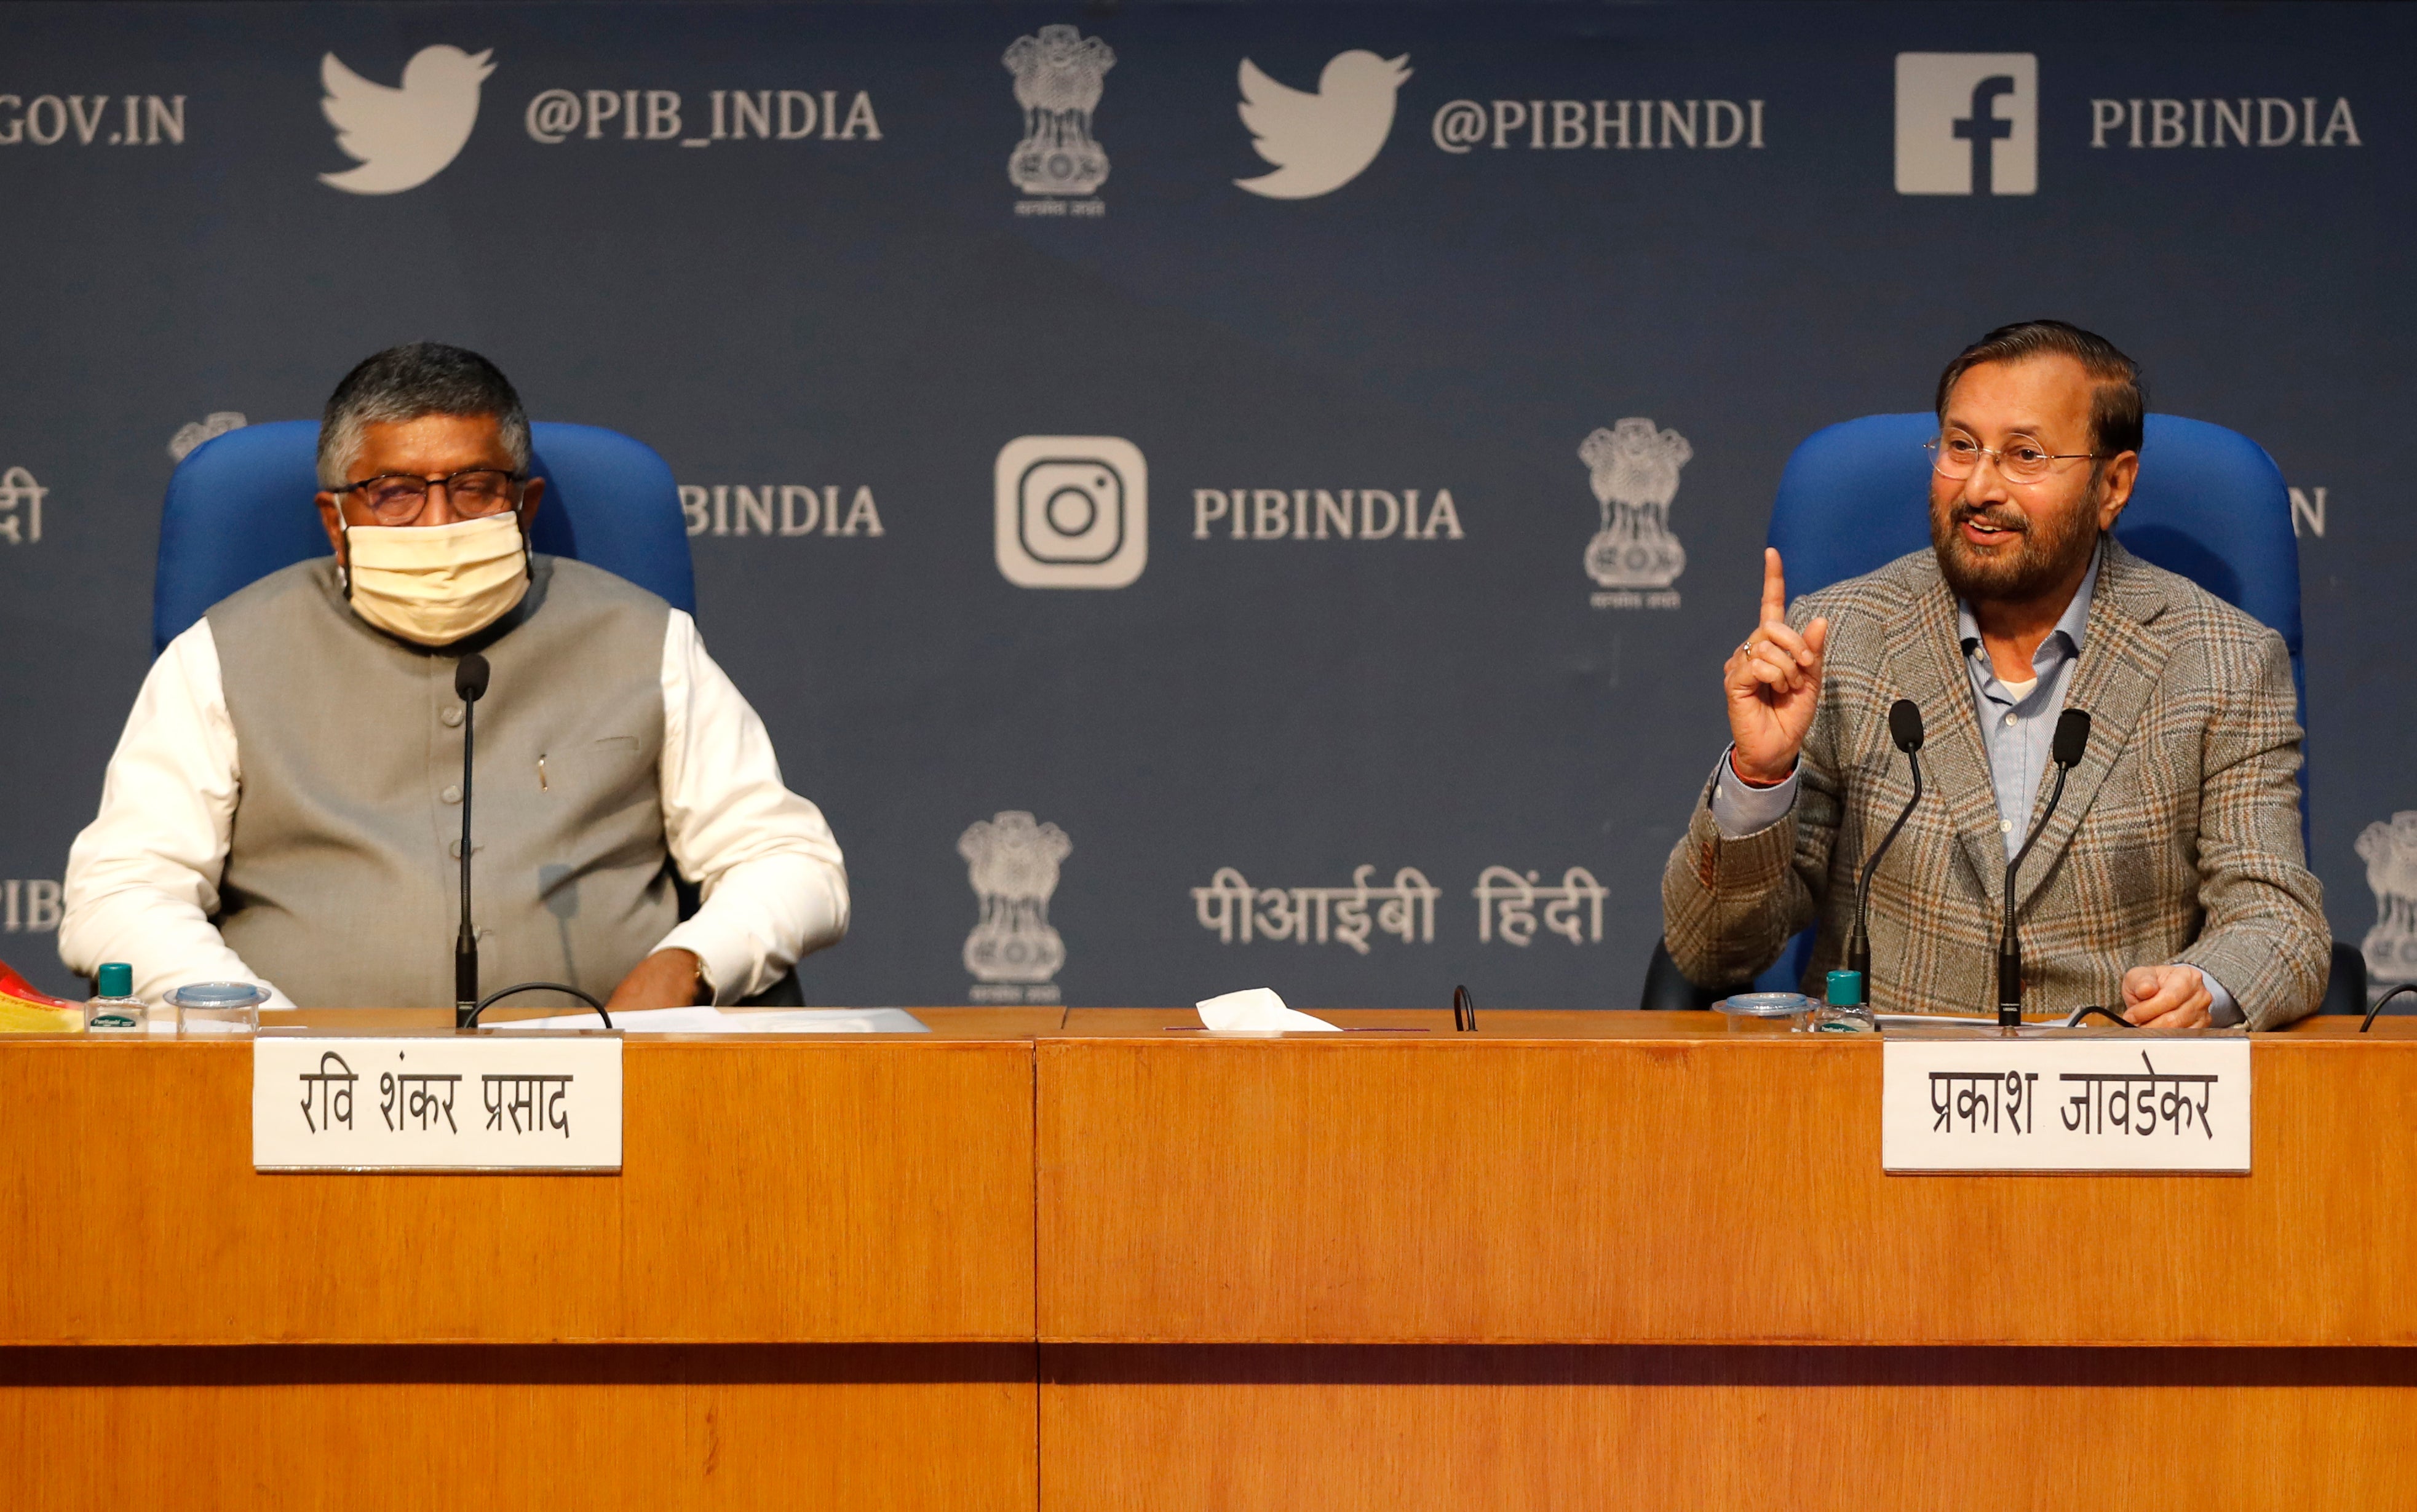 <p>File image: India's IT Minister Ravi Shankar Prasad, left, and Information and Broadcasting Minister Prakash Javadekar address a press conference announcing new regulations for social media companies in February</p>